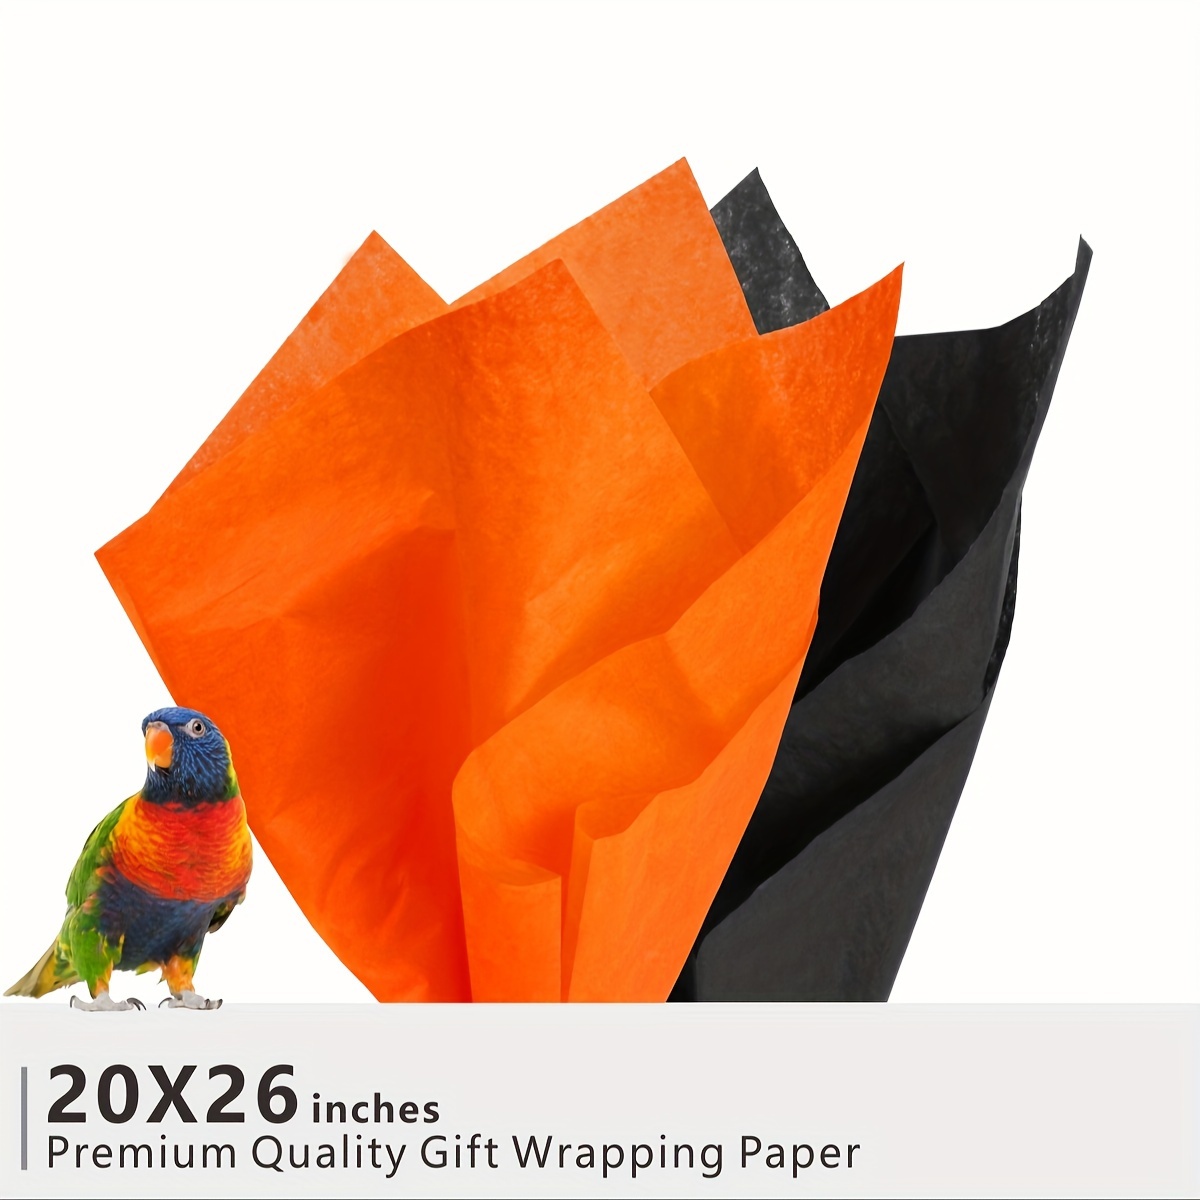 Como empacar un libro en Papel Seda para regalo - Wrapped in tissue paper 